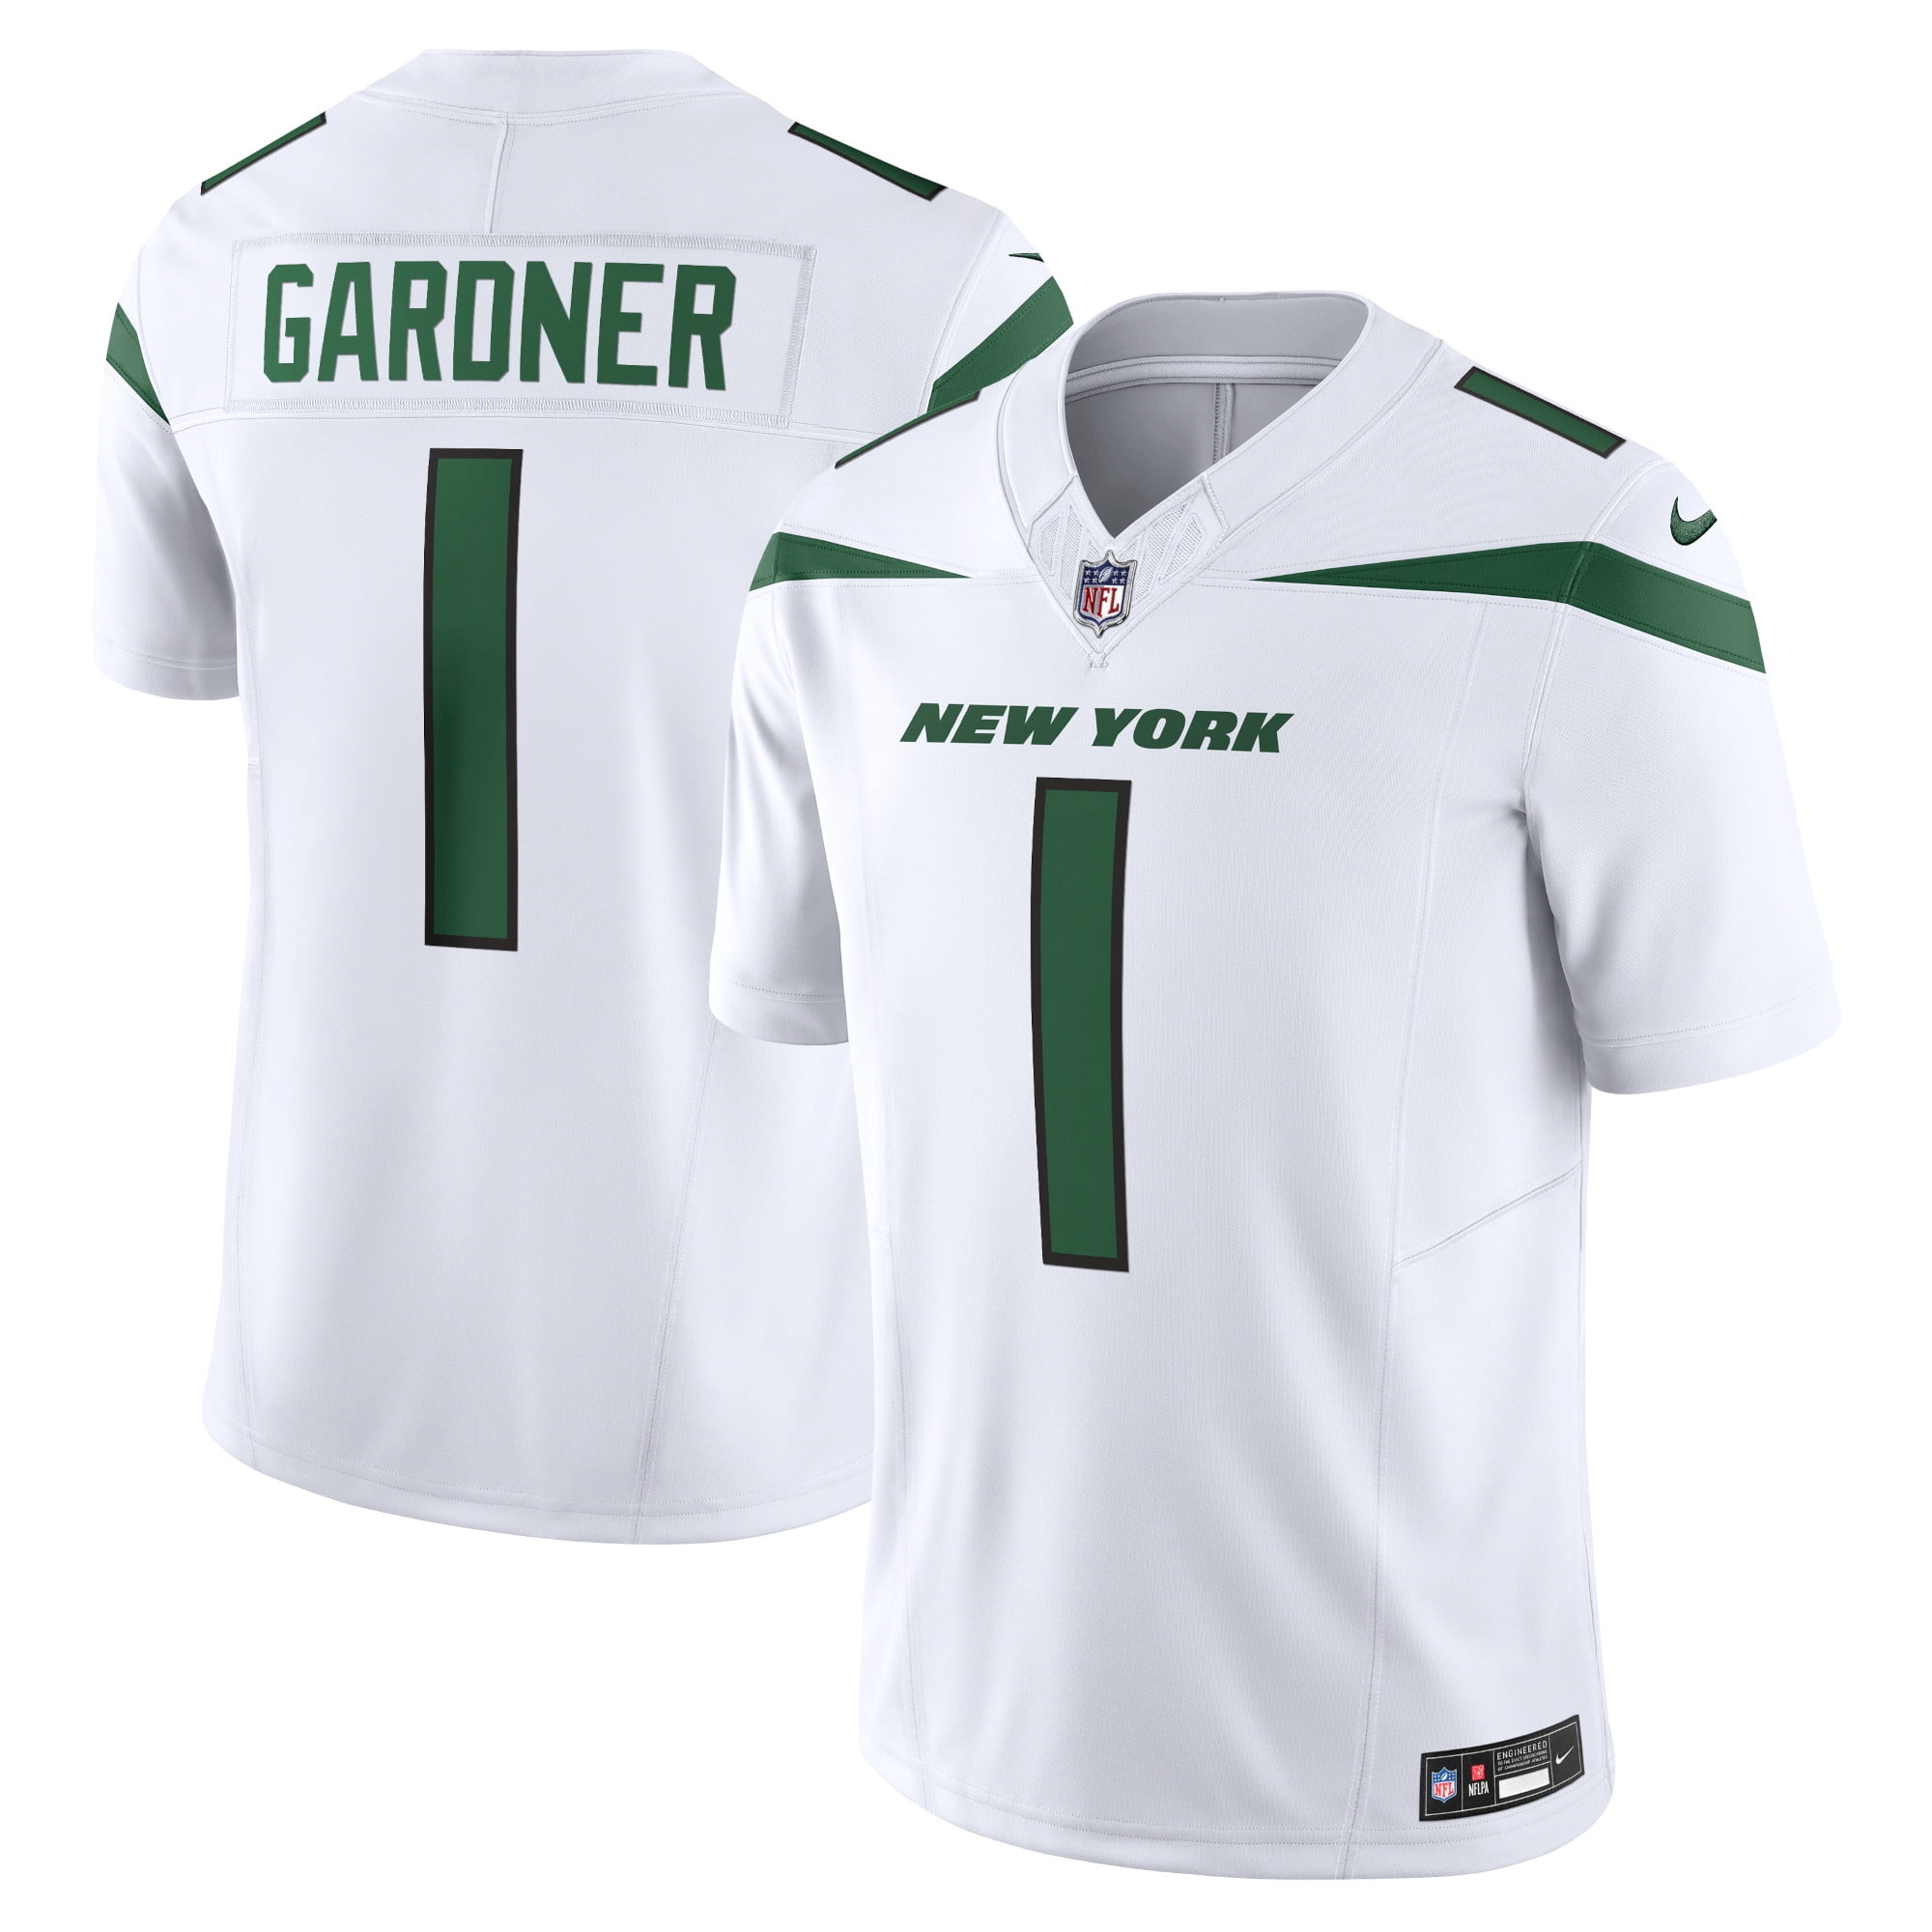 Ahmad Sauce Gardner Autographed New York Jets Signed Football Full Siz